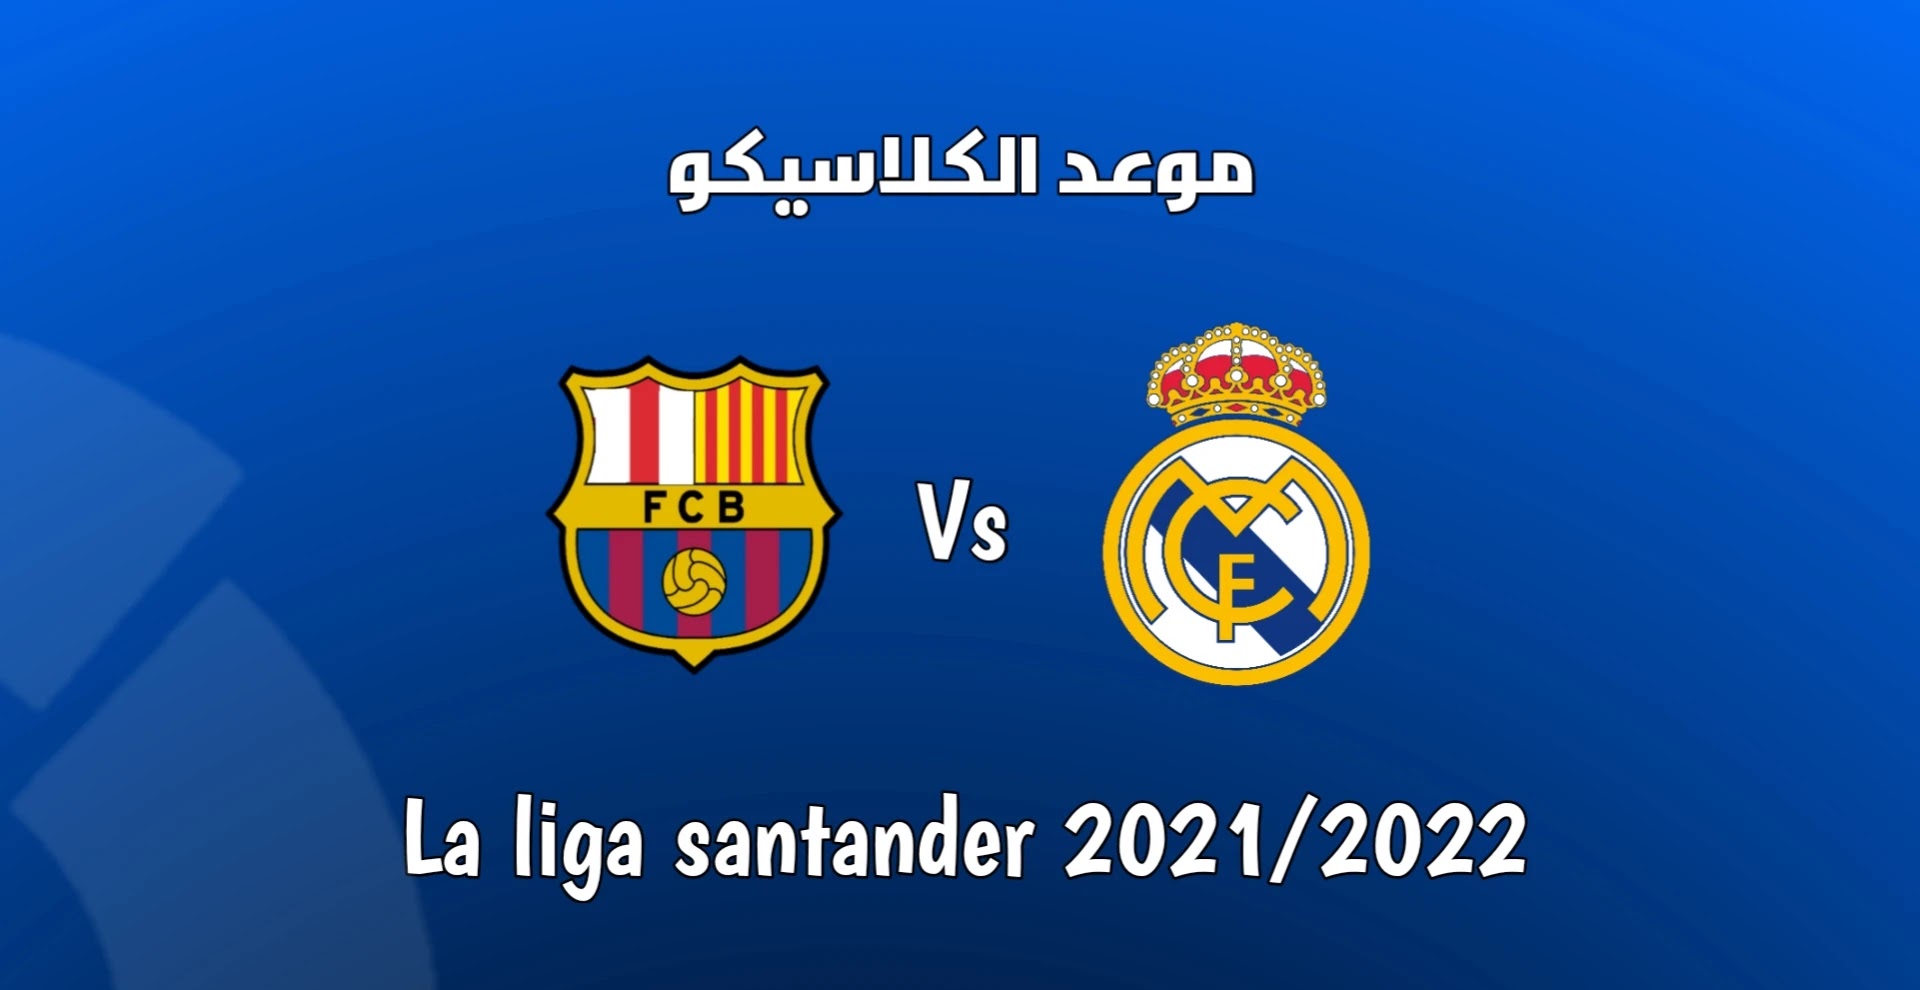 La date du Clasico Real Madrid Barcelone 2022